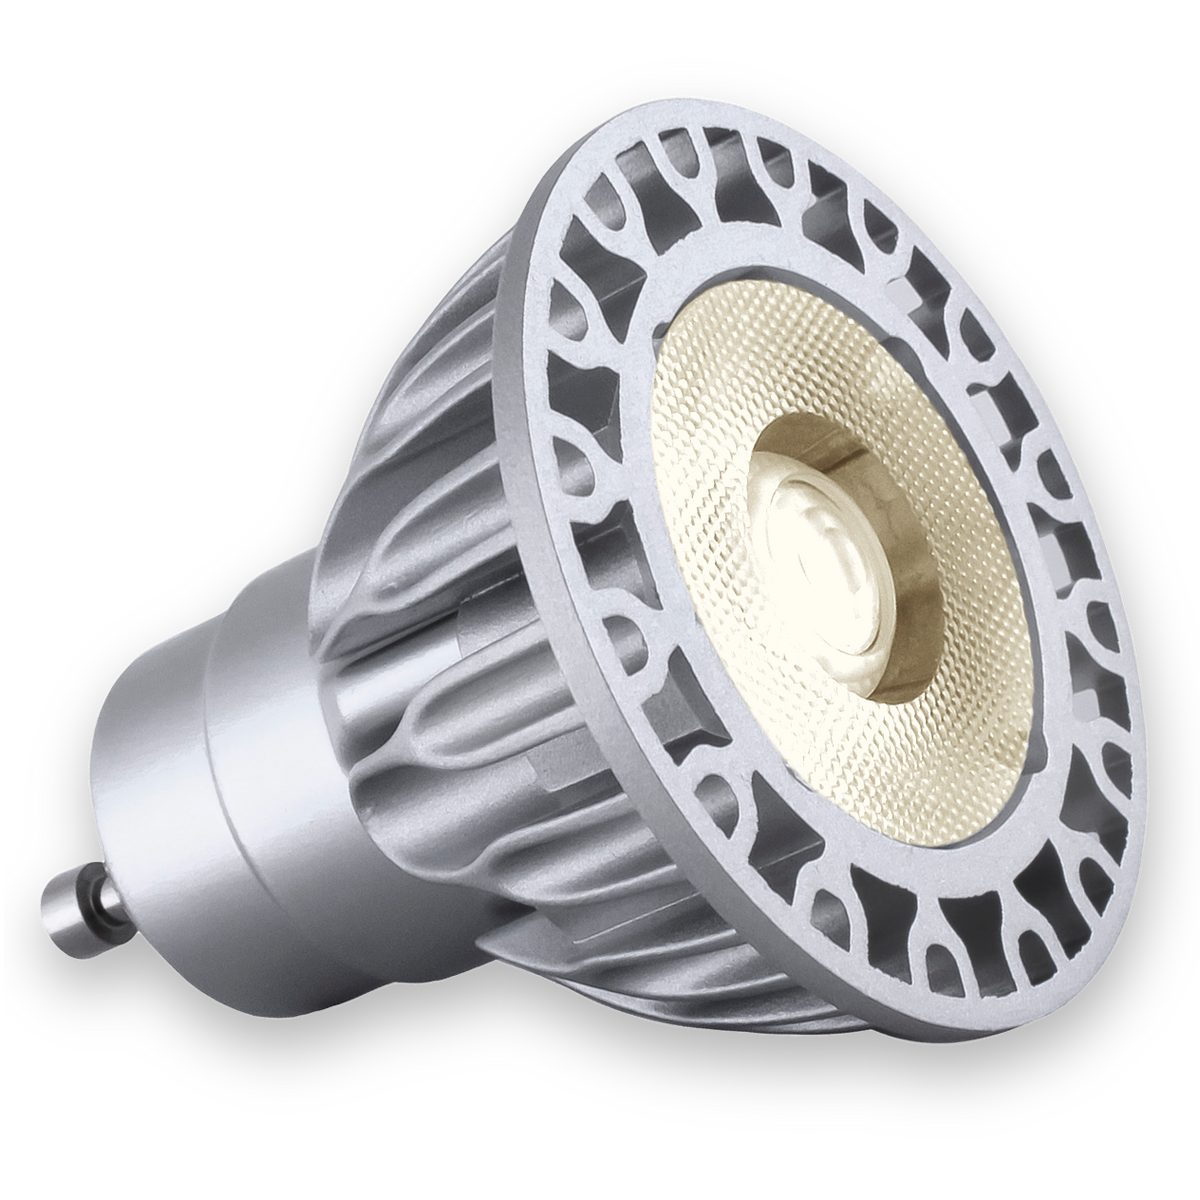 Soraa LED-Leuchtmittel Soraa Vivid 3 MR16 GU10 - Vollspektrum LED - 7.5Watt, 36°, GU10, Warmton - wie Glühlampe, Vollspektrum LED mit CRI 95 R9 - dimmbar